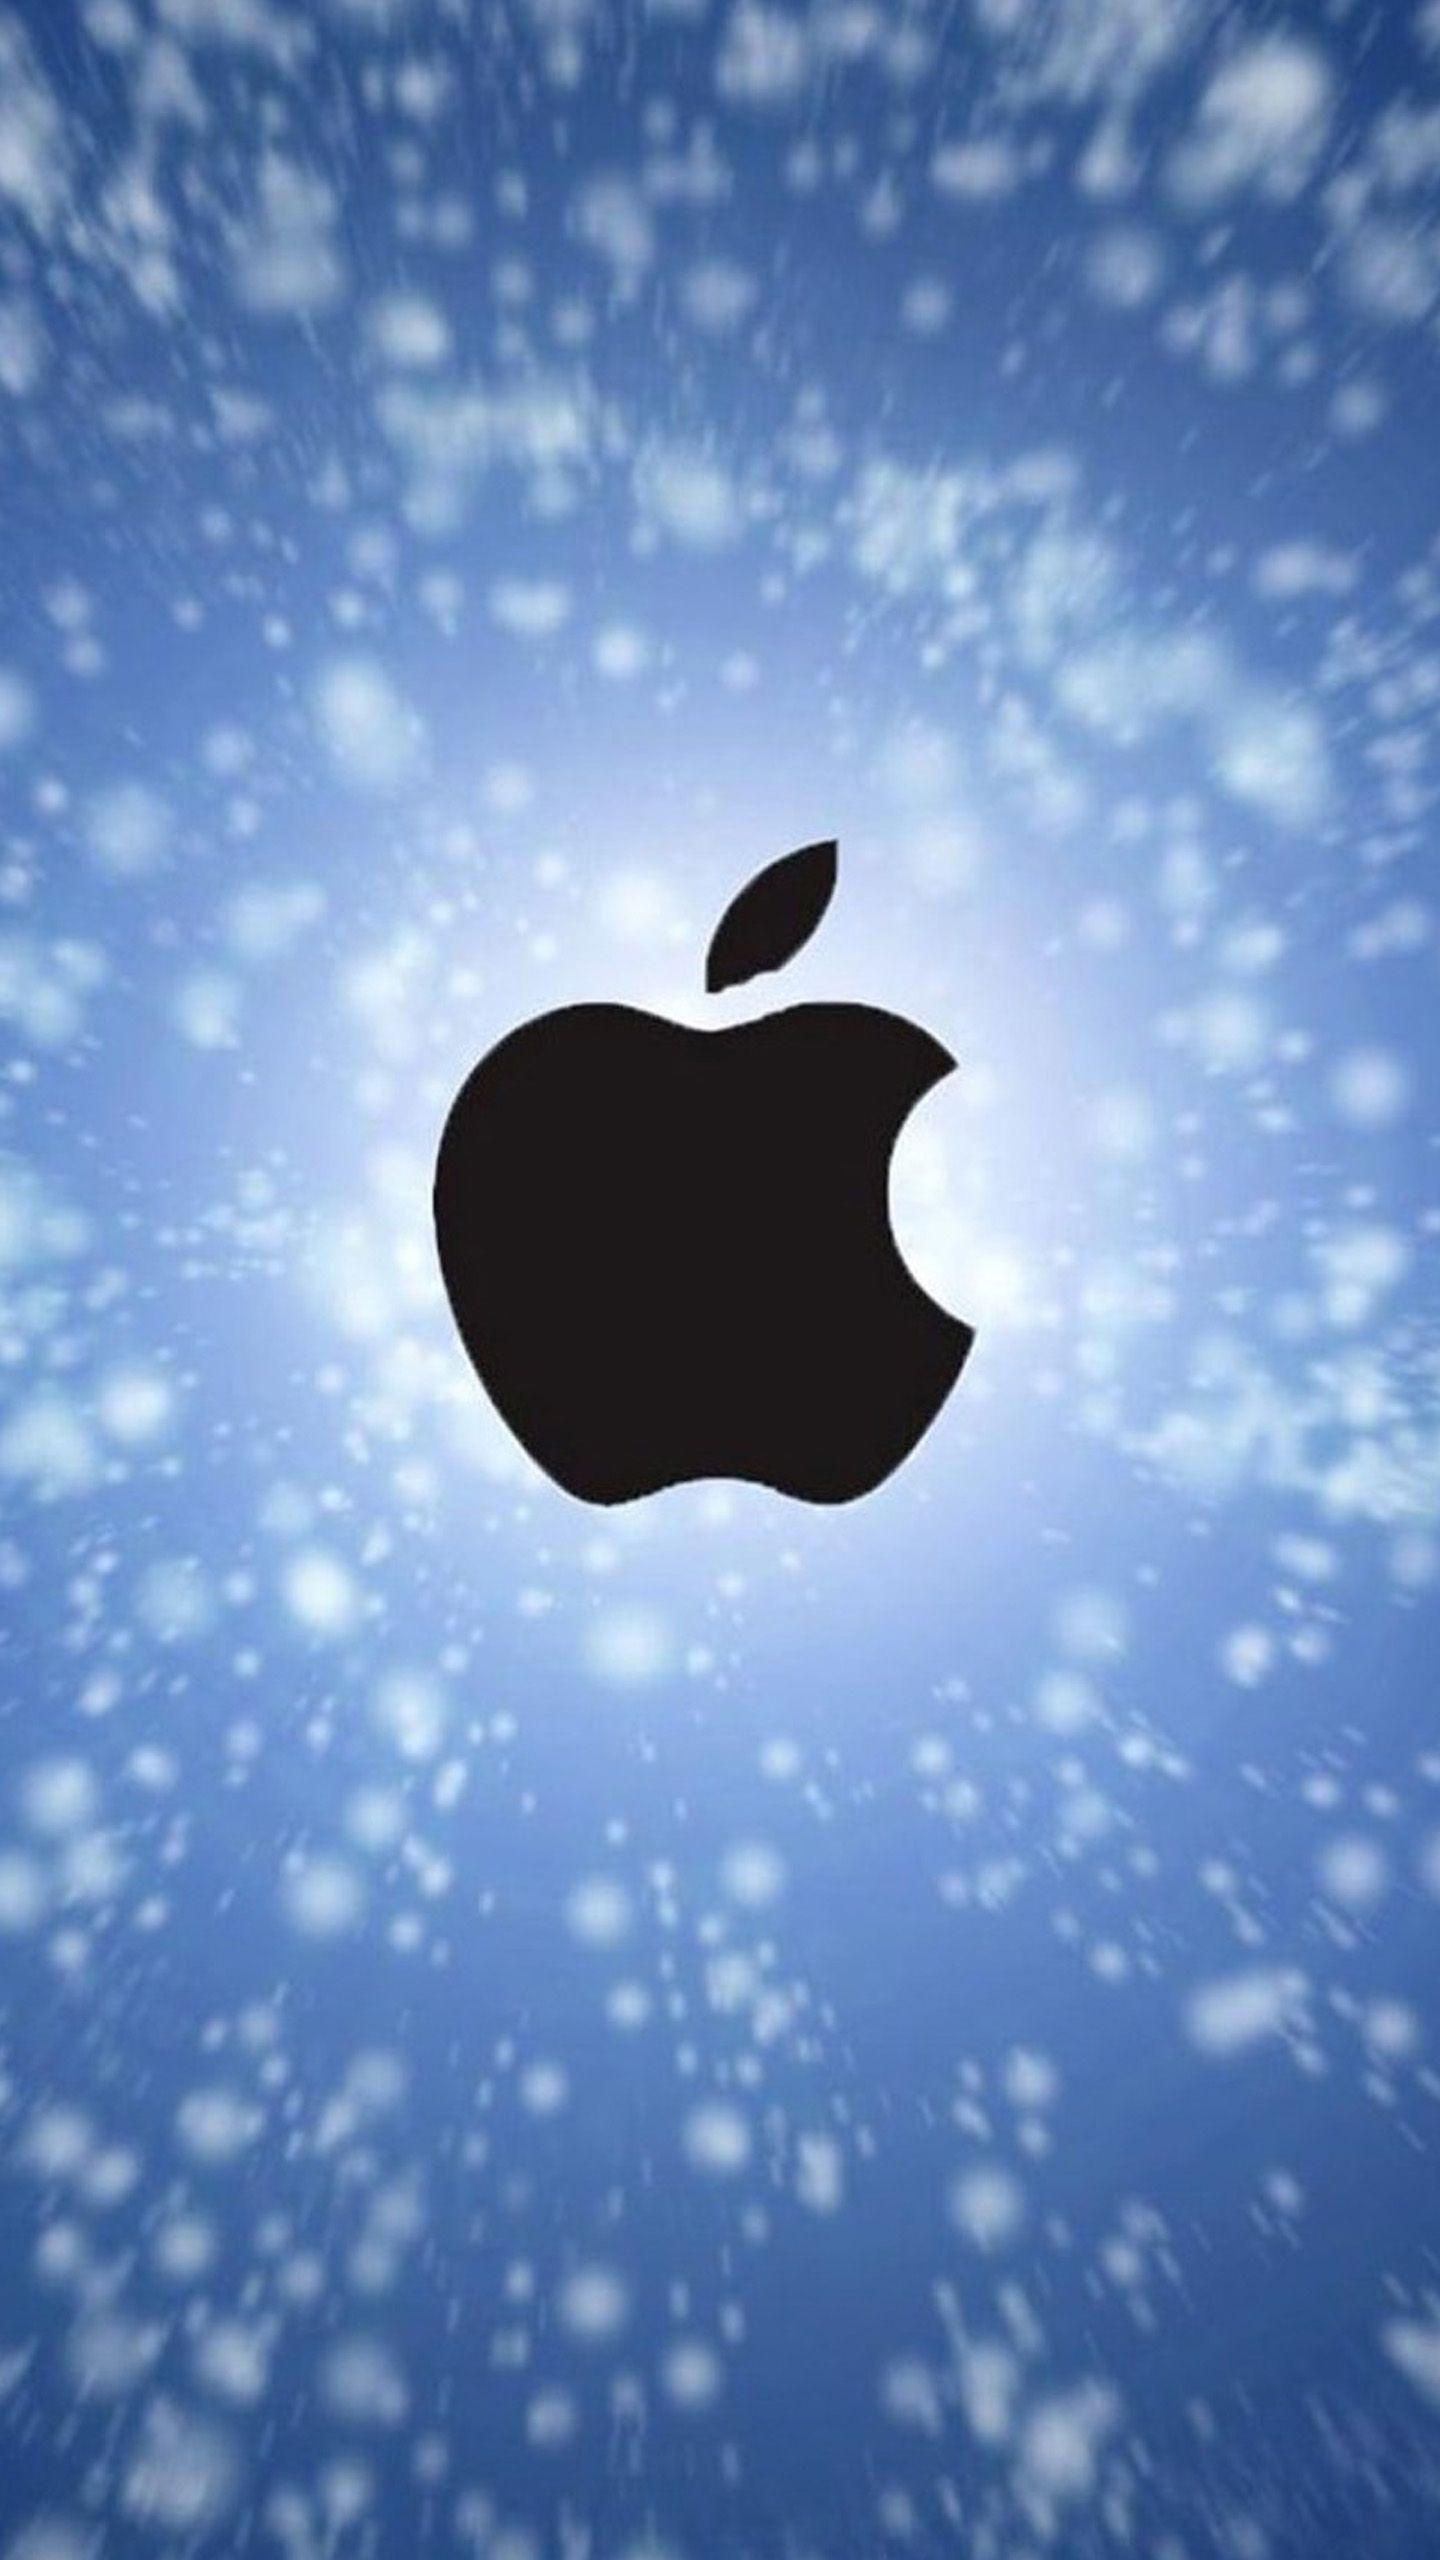 Apple Galaxy Logo - Awesome Apple logo Galaxy S6 Wallpaper. Apple Fever!